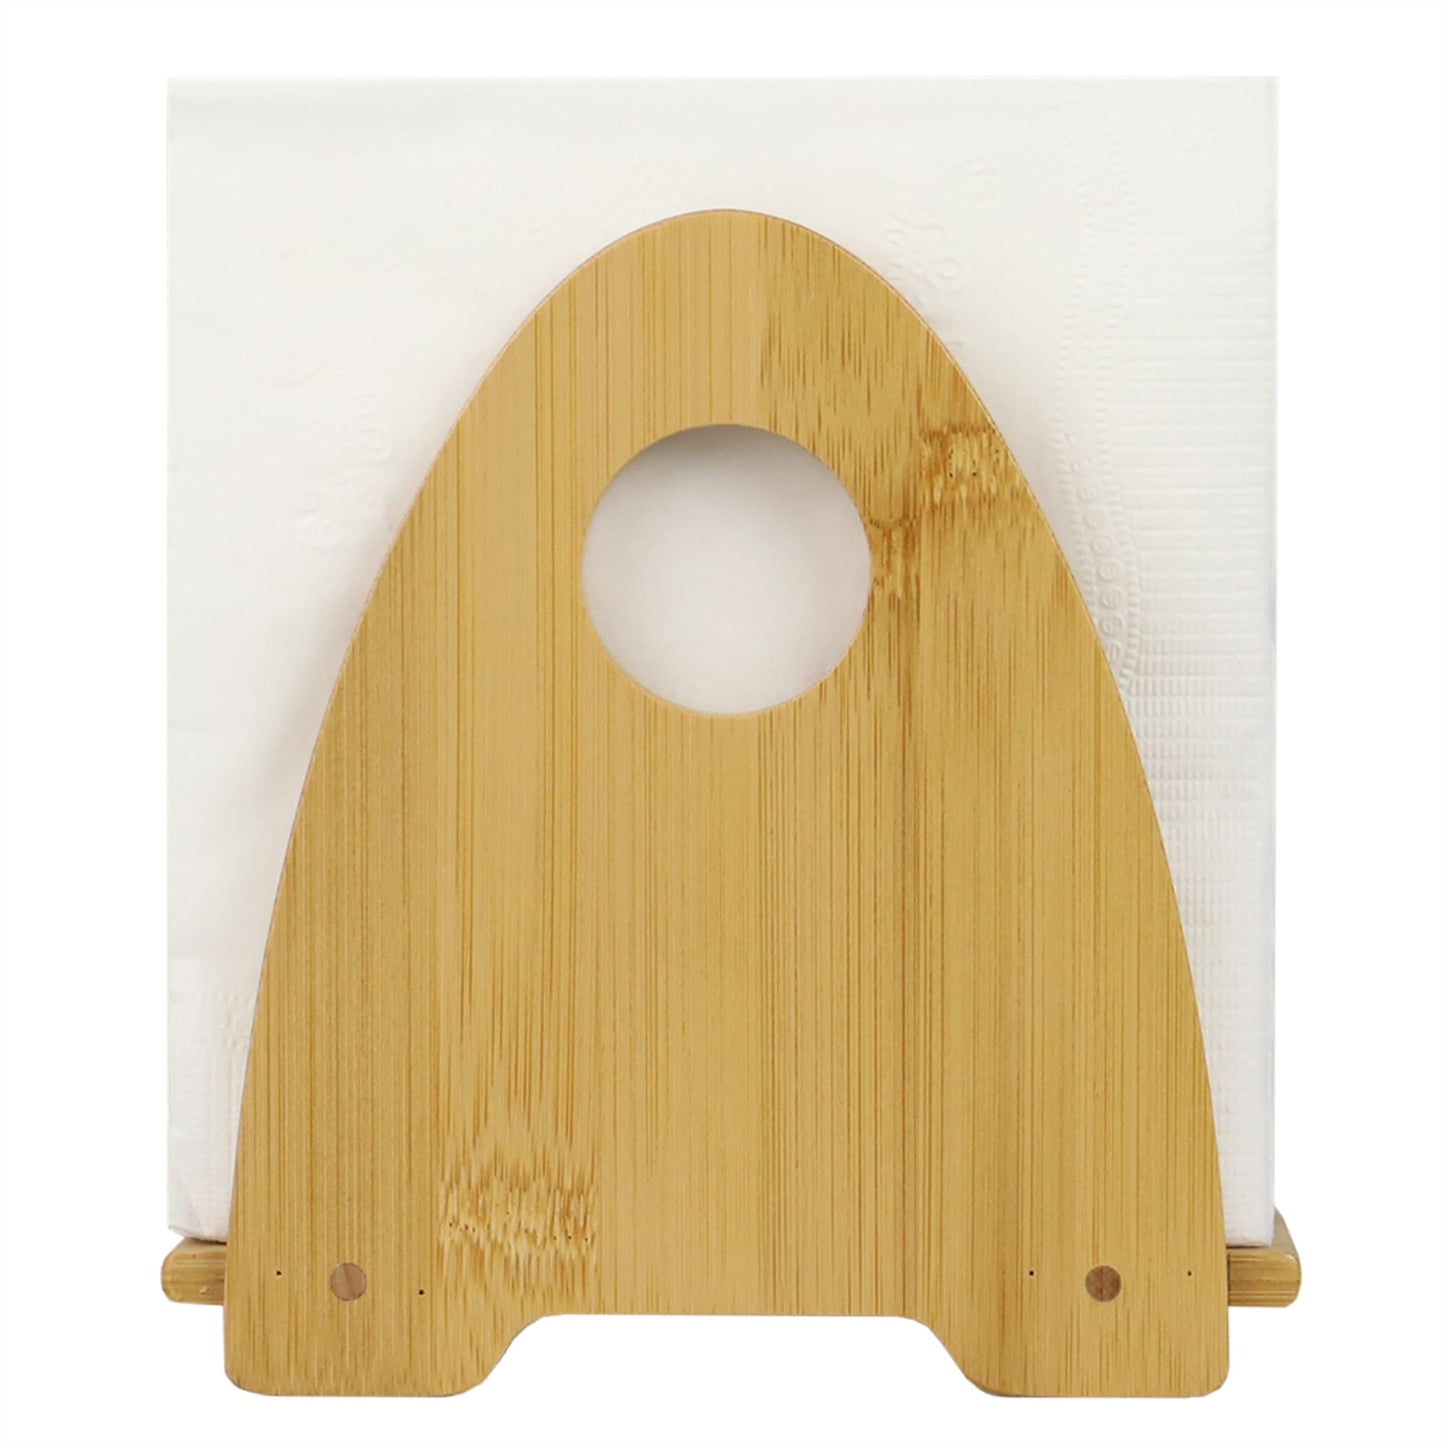 Michael Graves Design Triangle Freestanding Upright Bamboo Napkin Holder, Natural